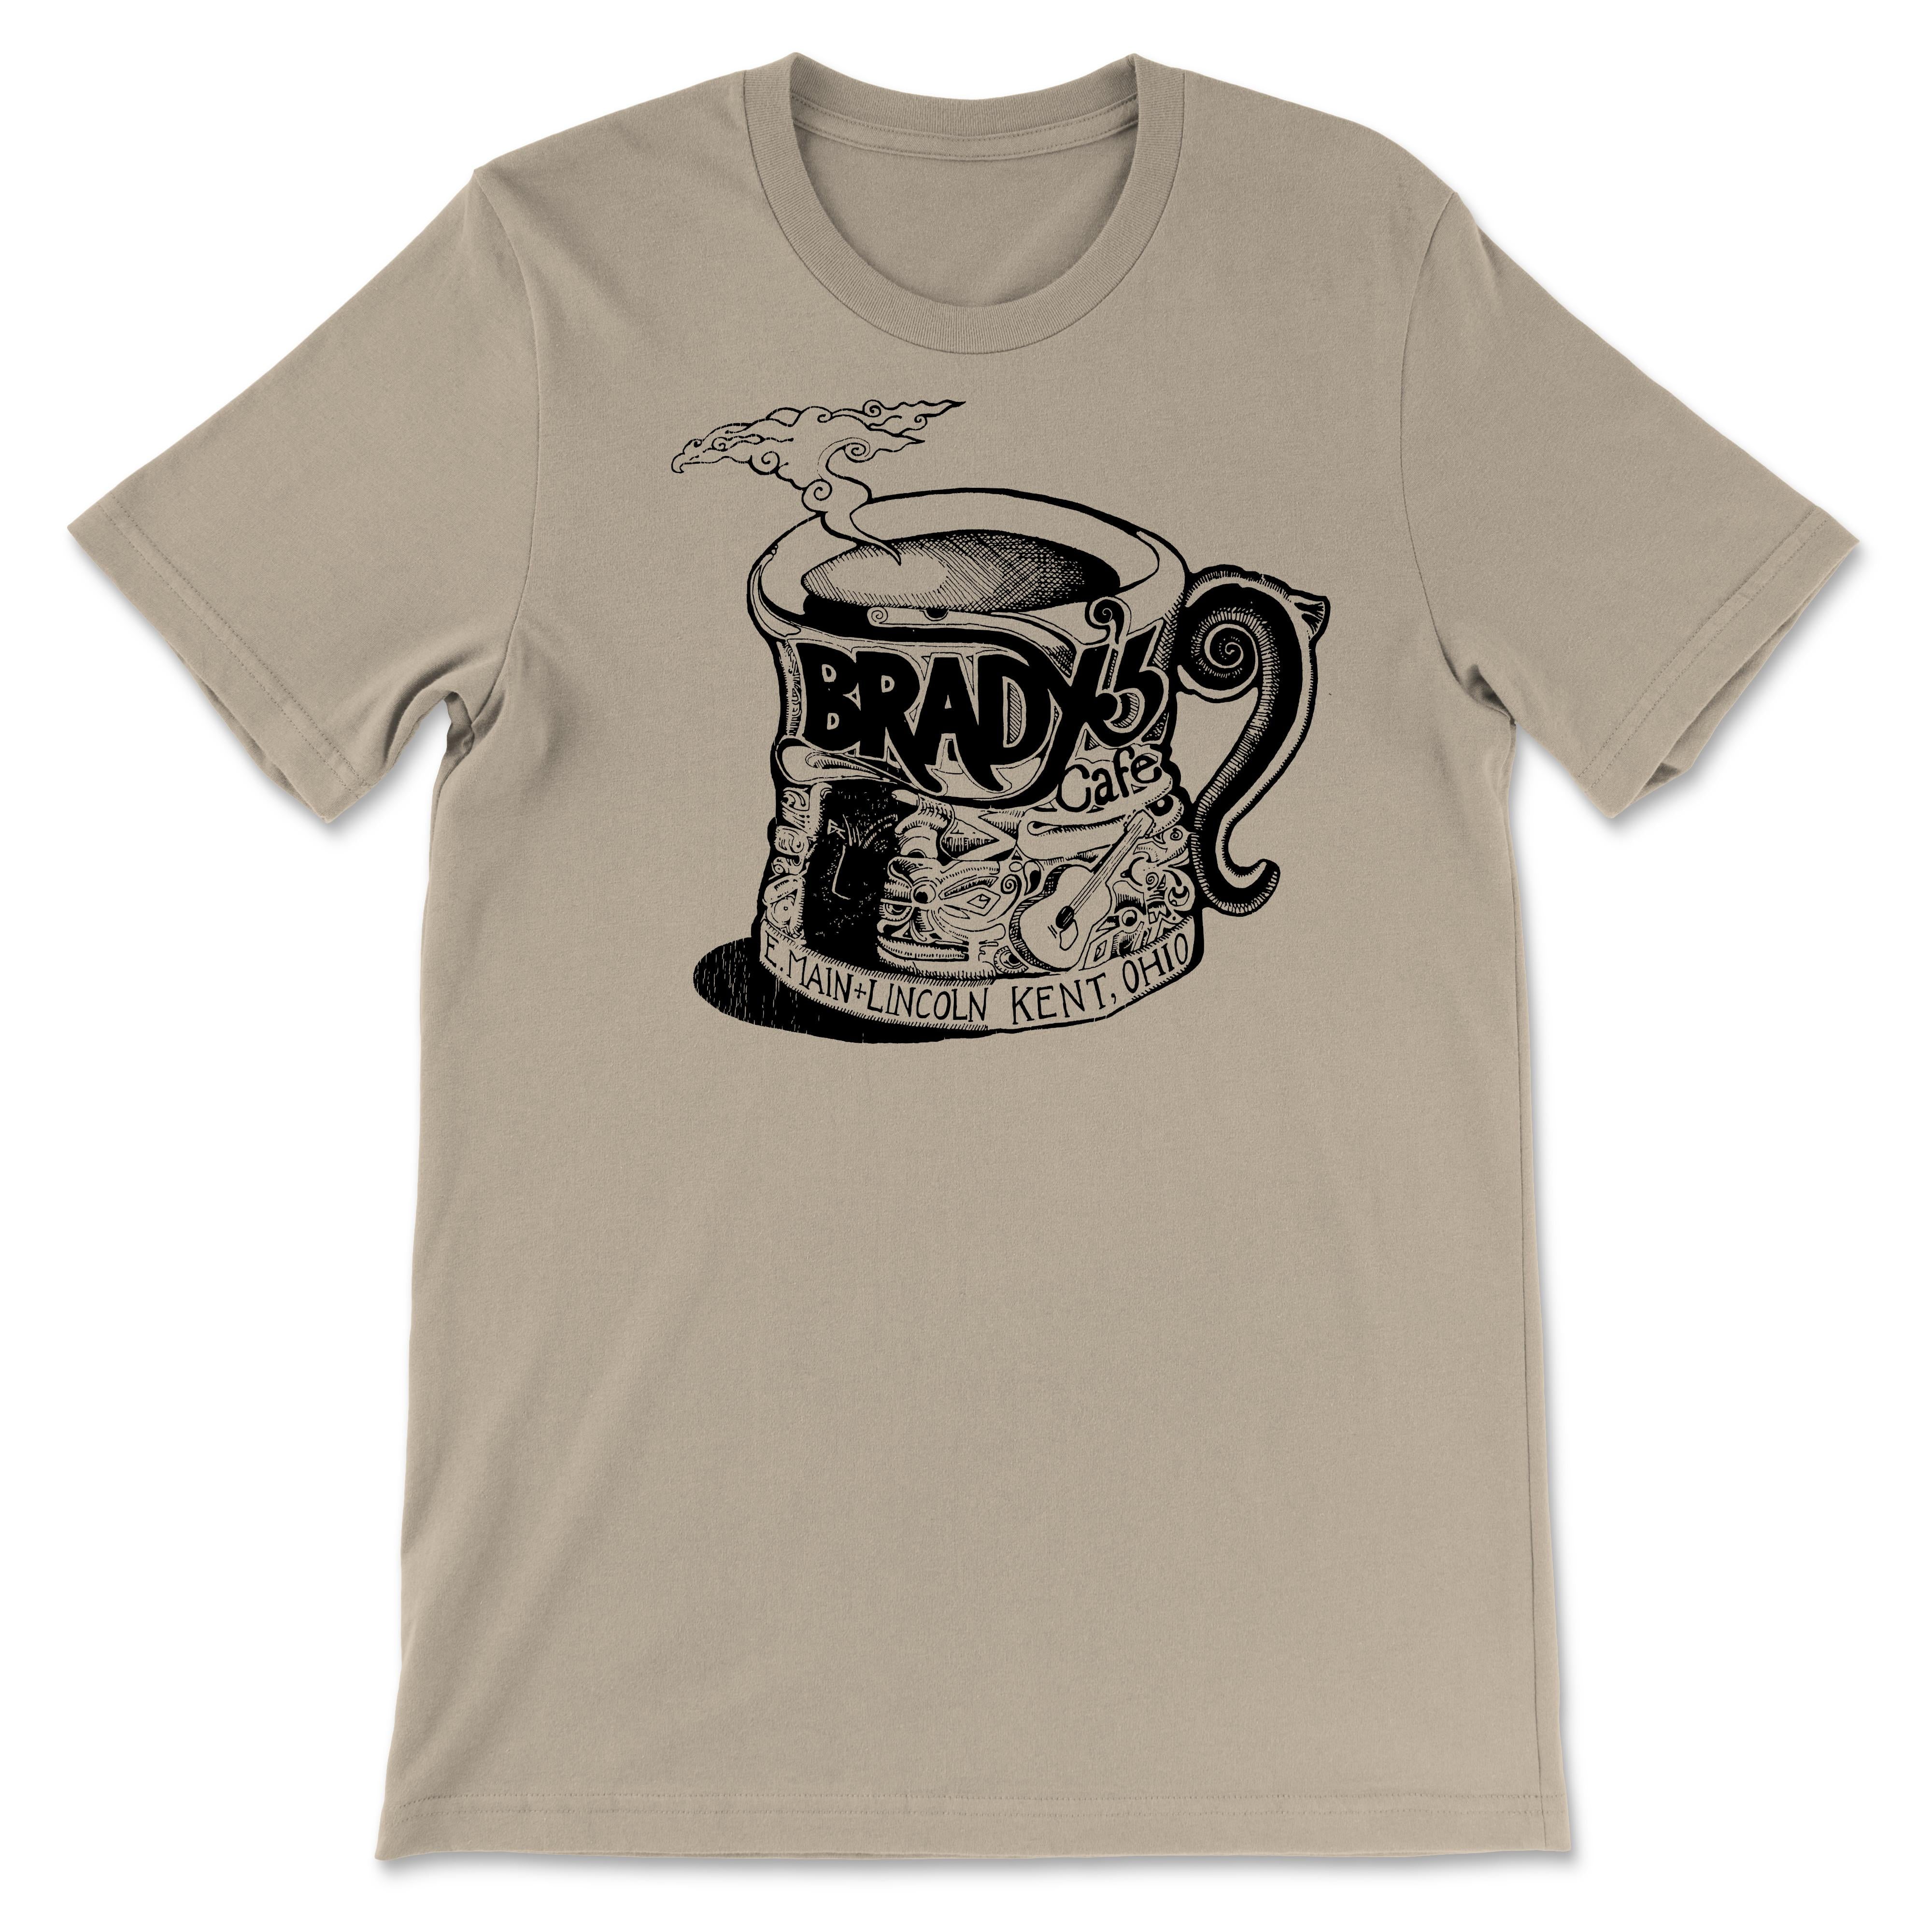 Kent Bradys Cafe Brown T-Shirt